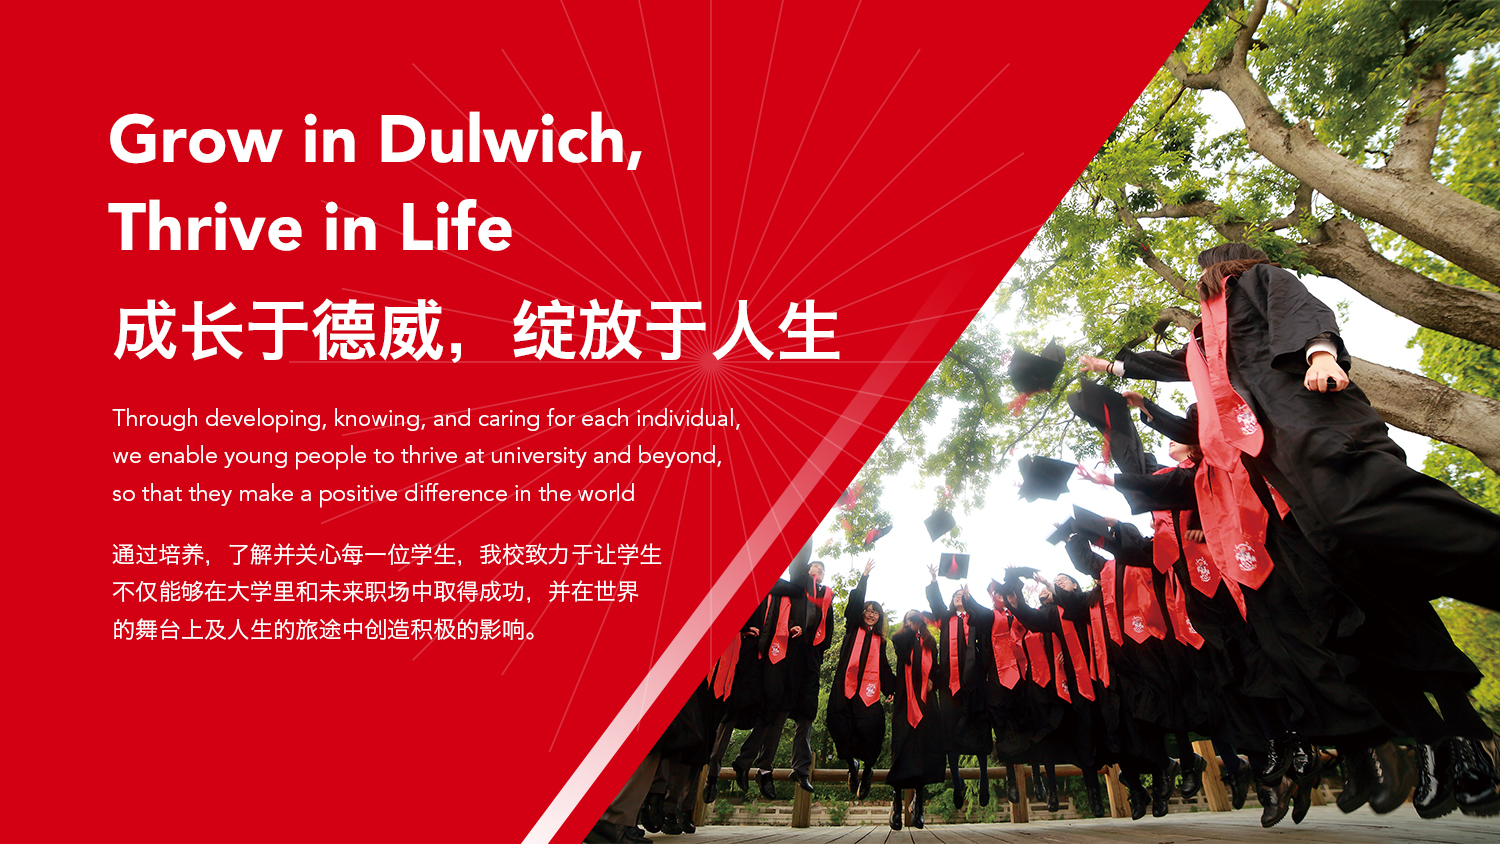 dhsz-vision-1-Dulwich_International_High_School_Suzhou-20201118-094713-959